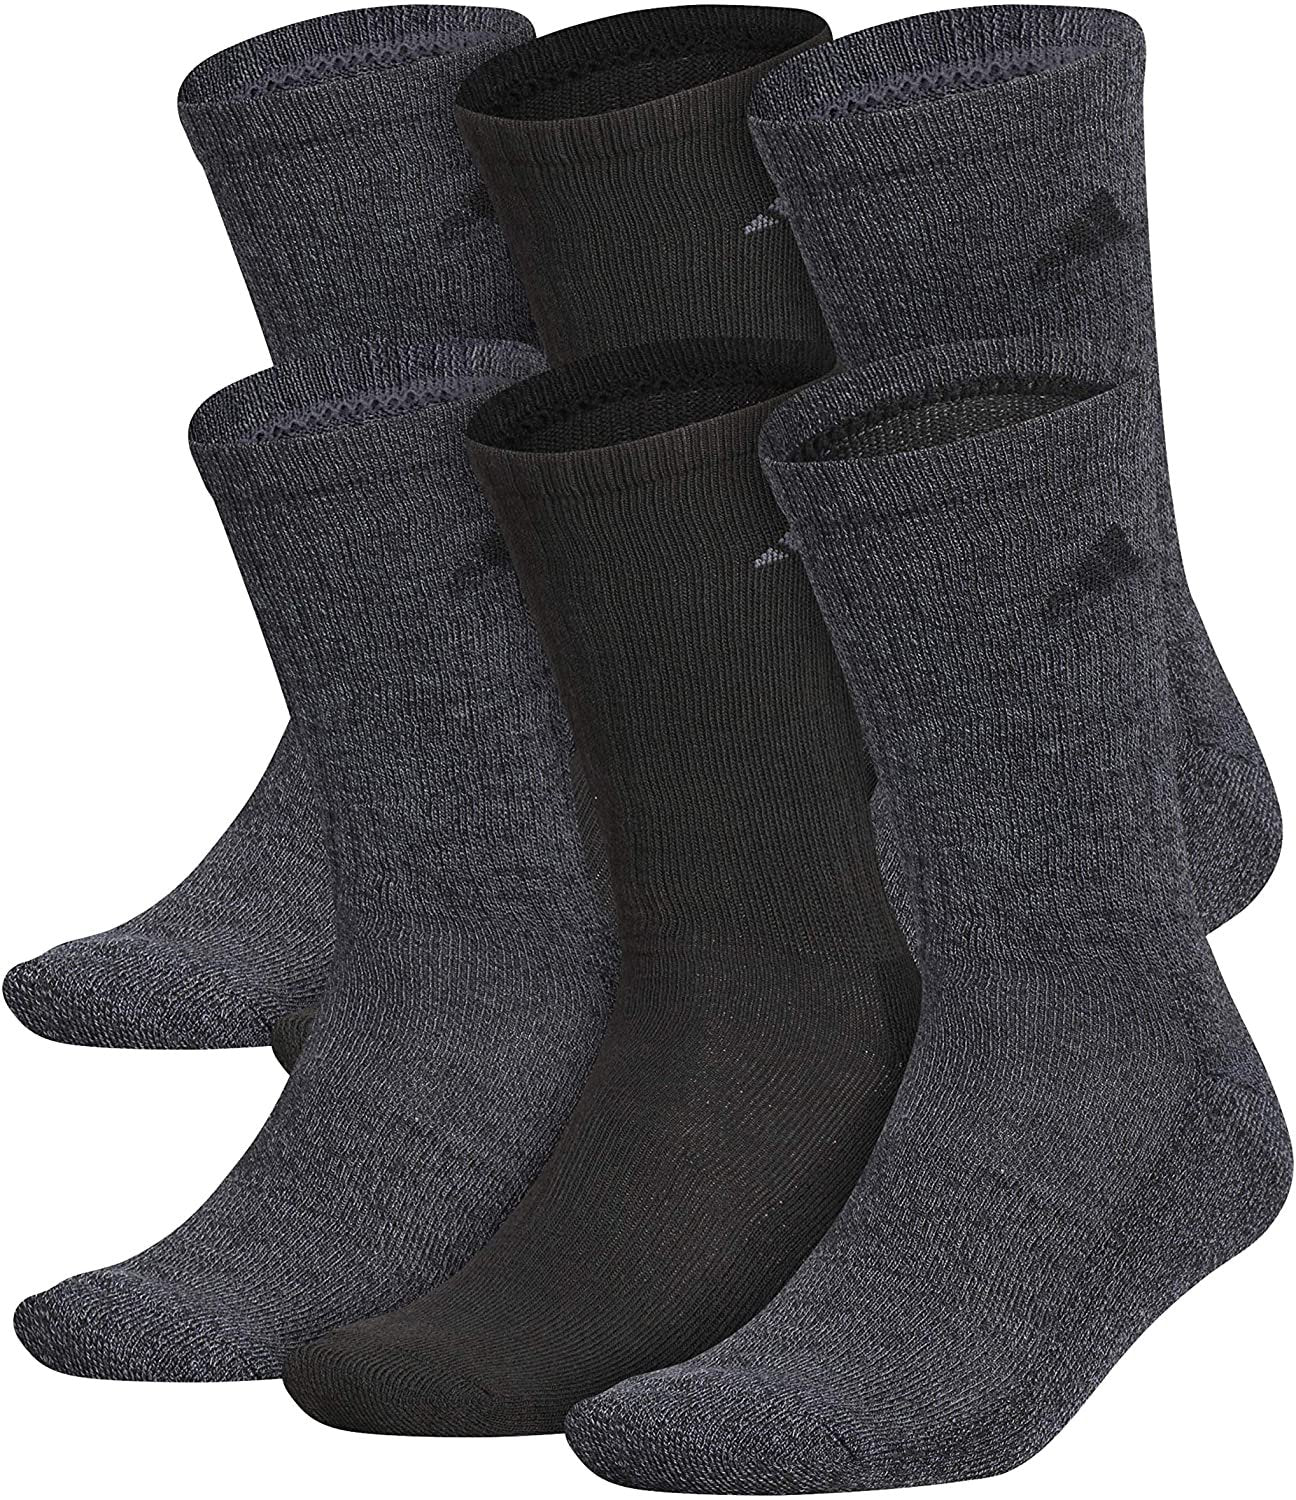 Adidas Athletic Cushioned Black - Onix Marl/Black/Onix Men's Crew Socks (6 Pair) - Becauze